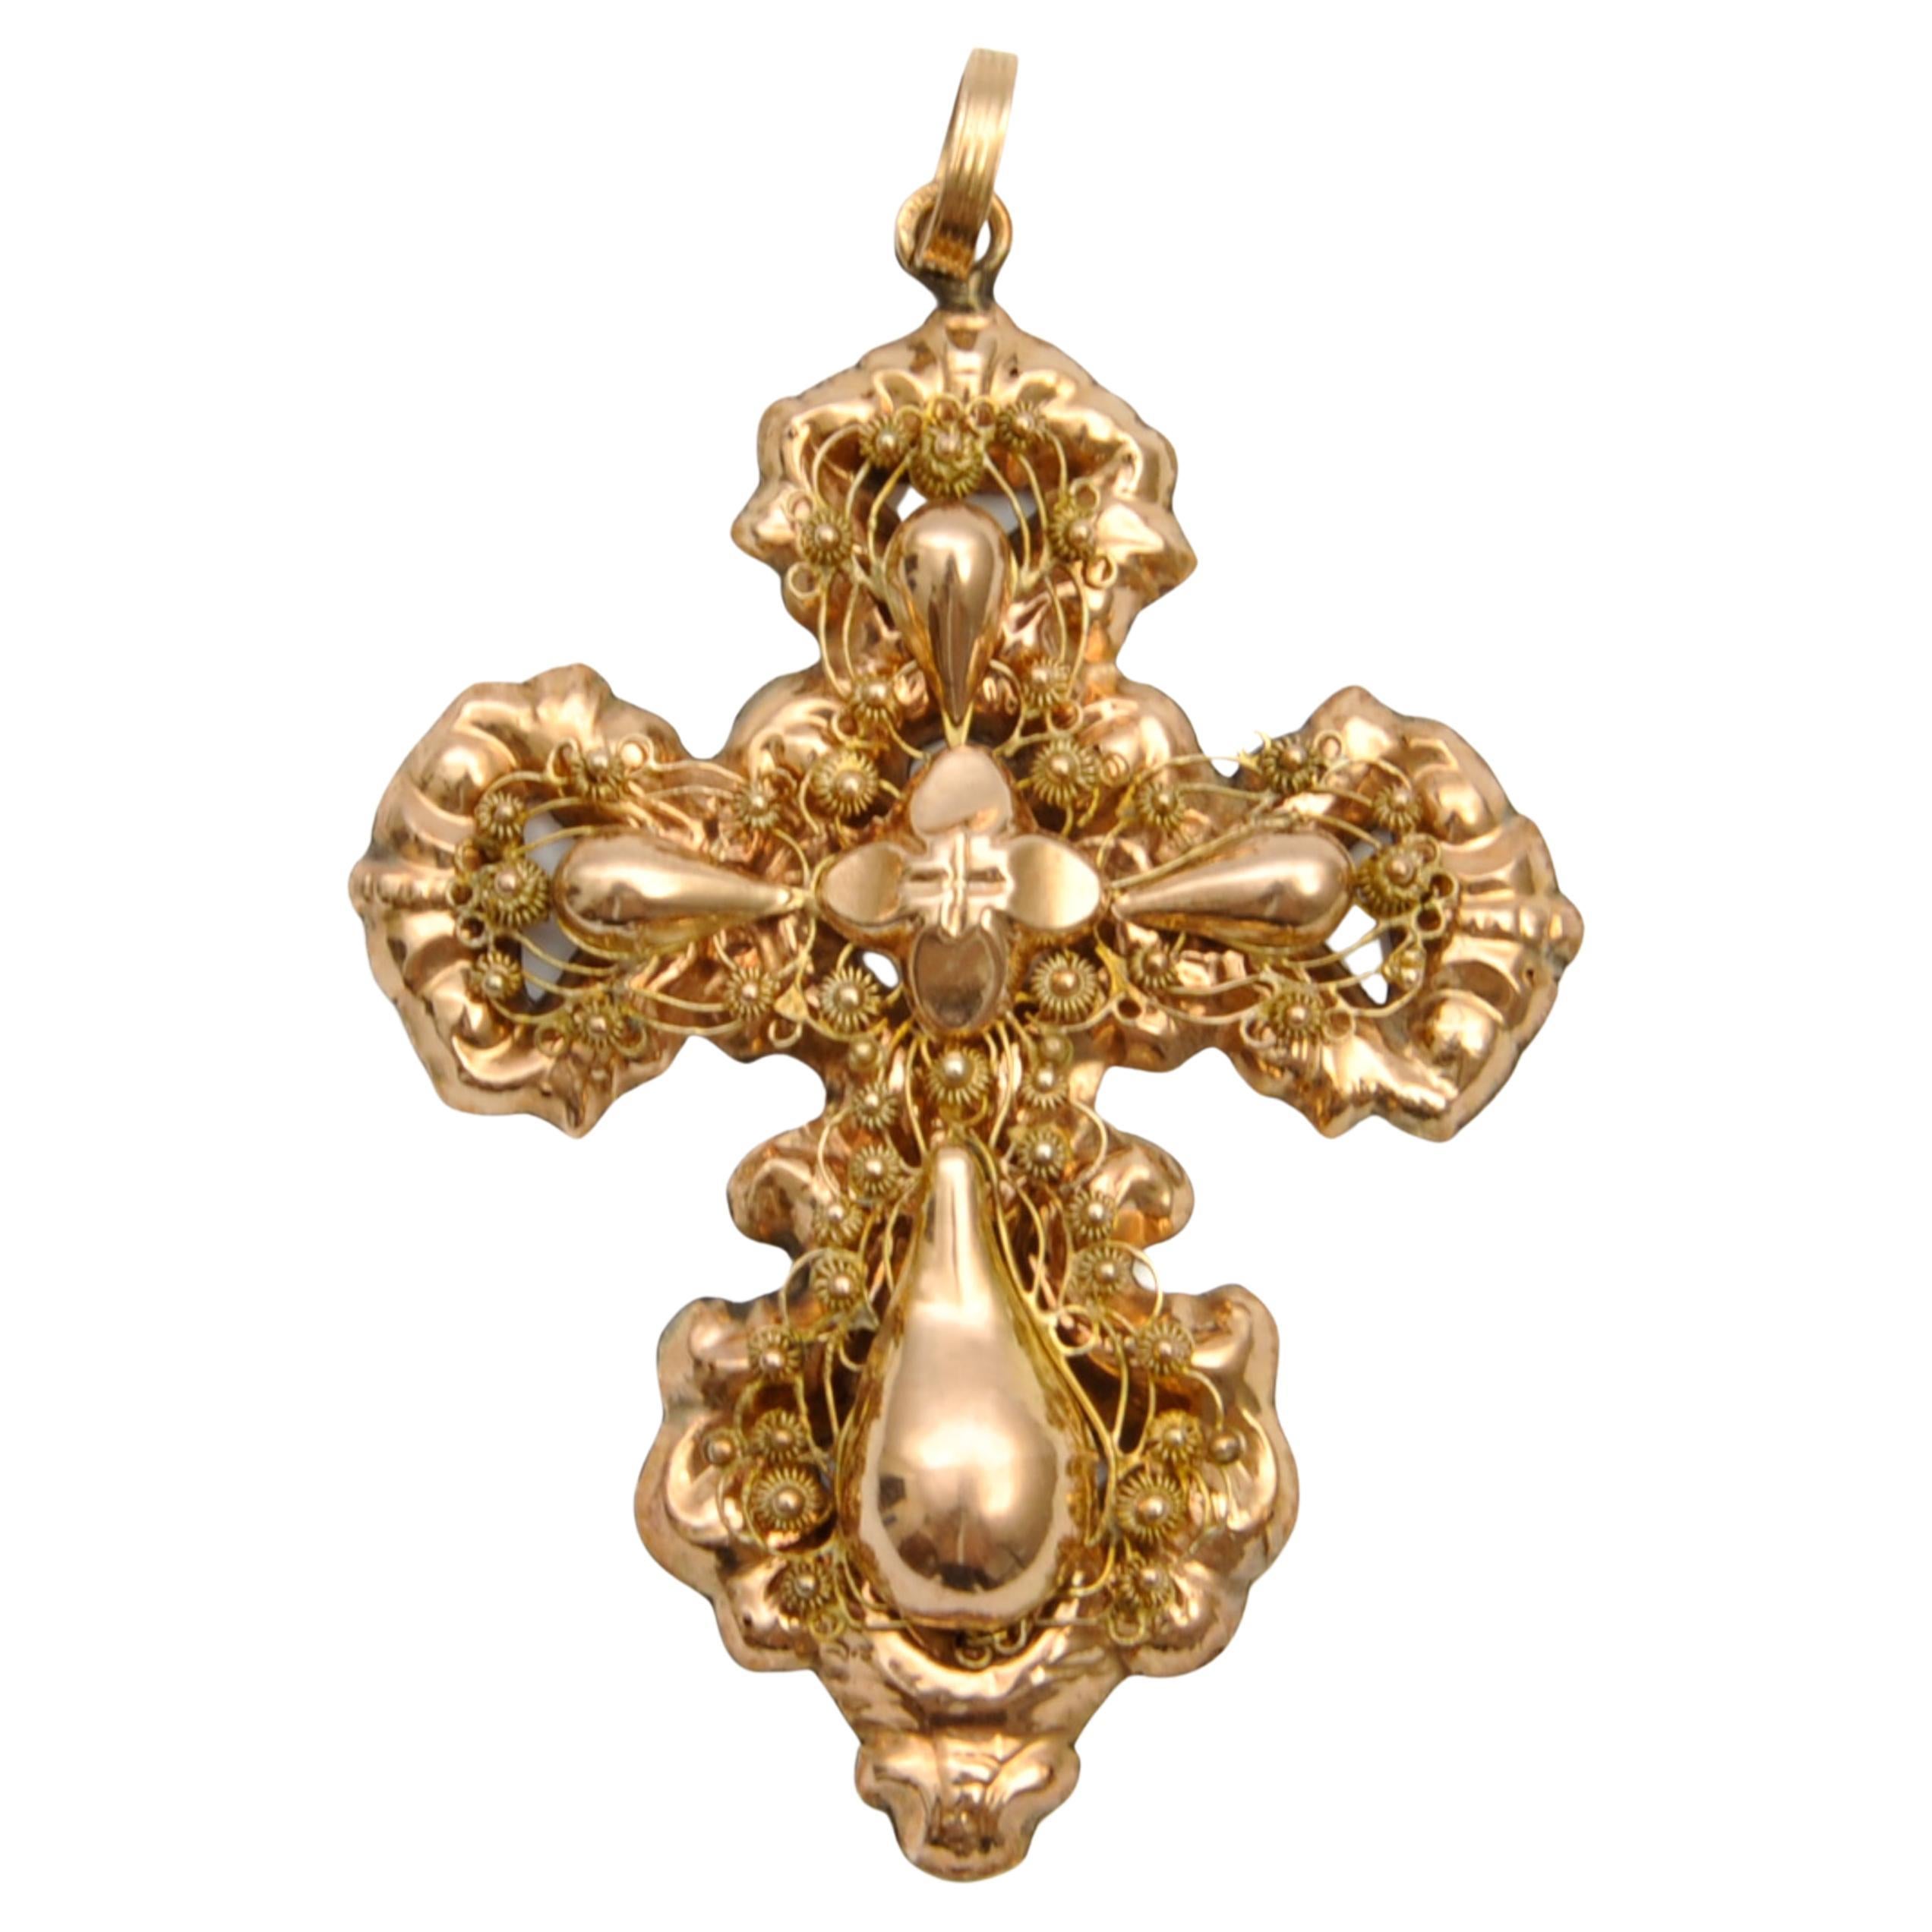 Antique 19th Century 14K Gold Filigree Cross Pendant